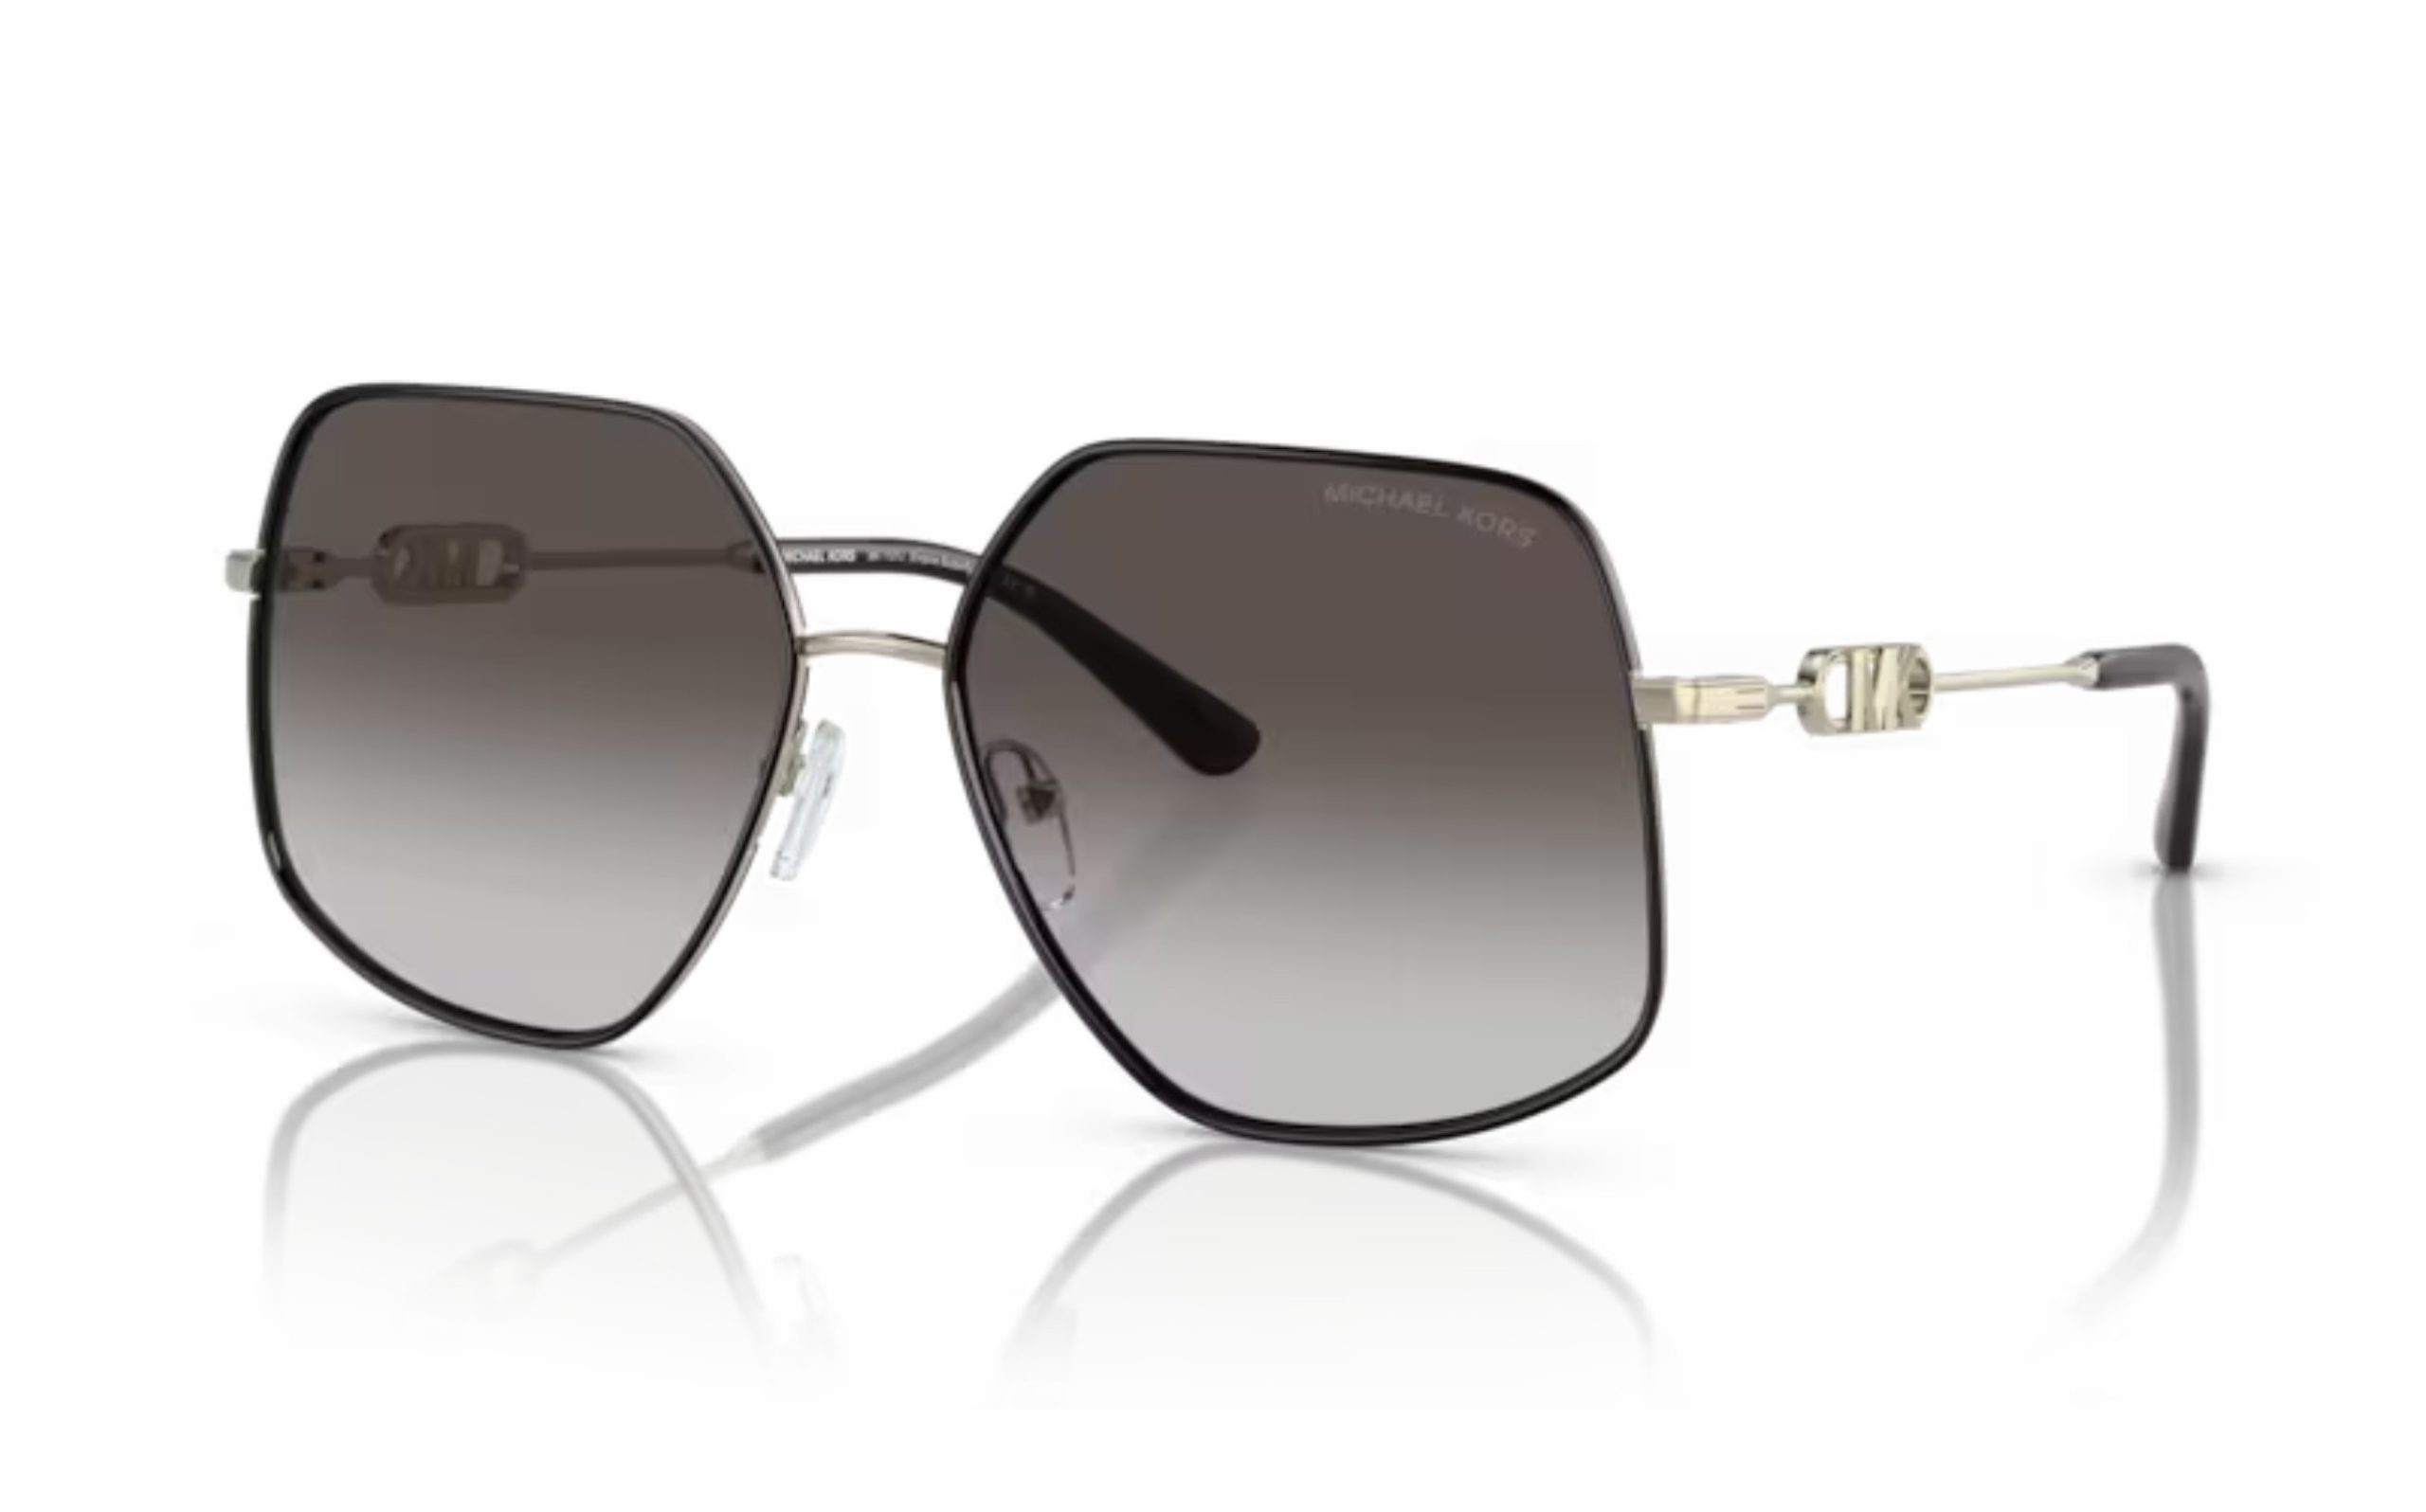 Michael Kors Sunglasses MK 1127J 10148G Grey | عالم النظارات السعودية